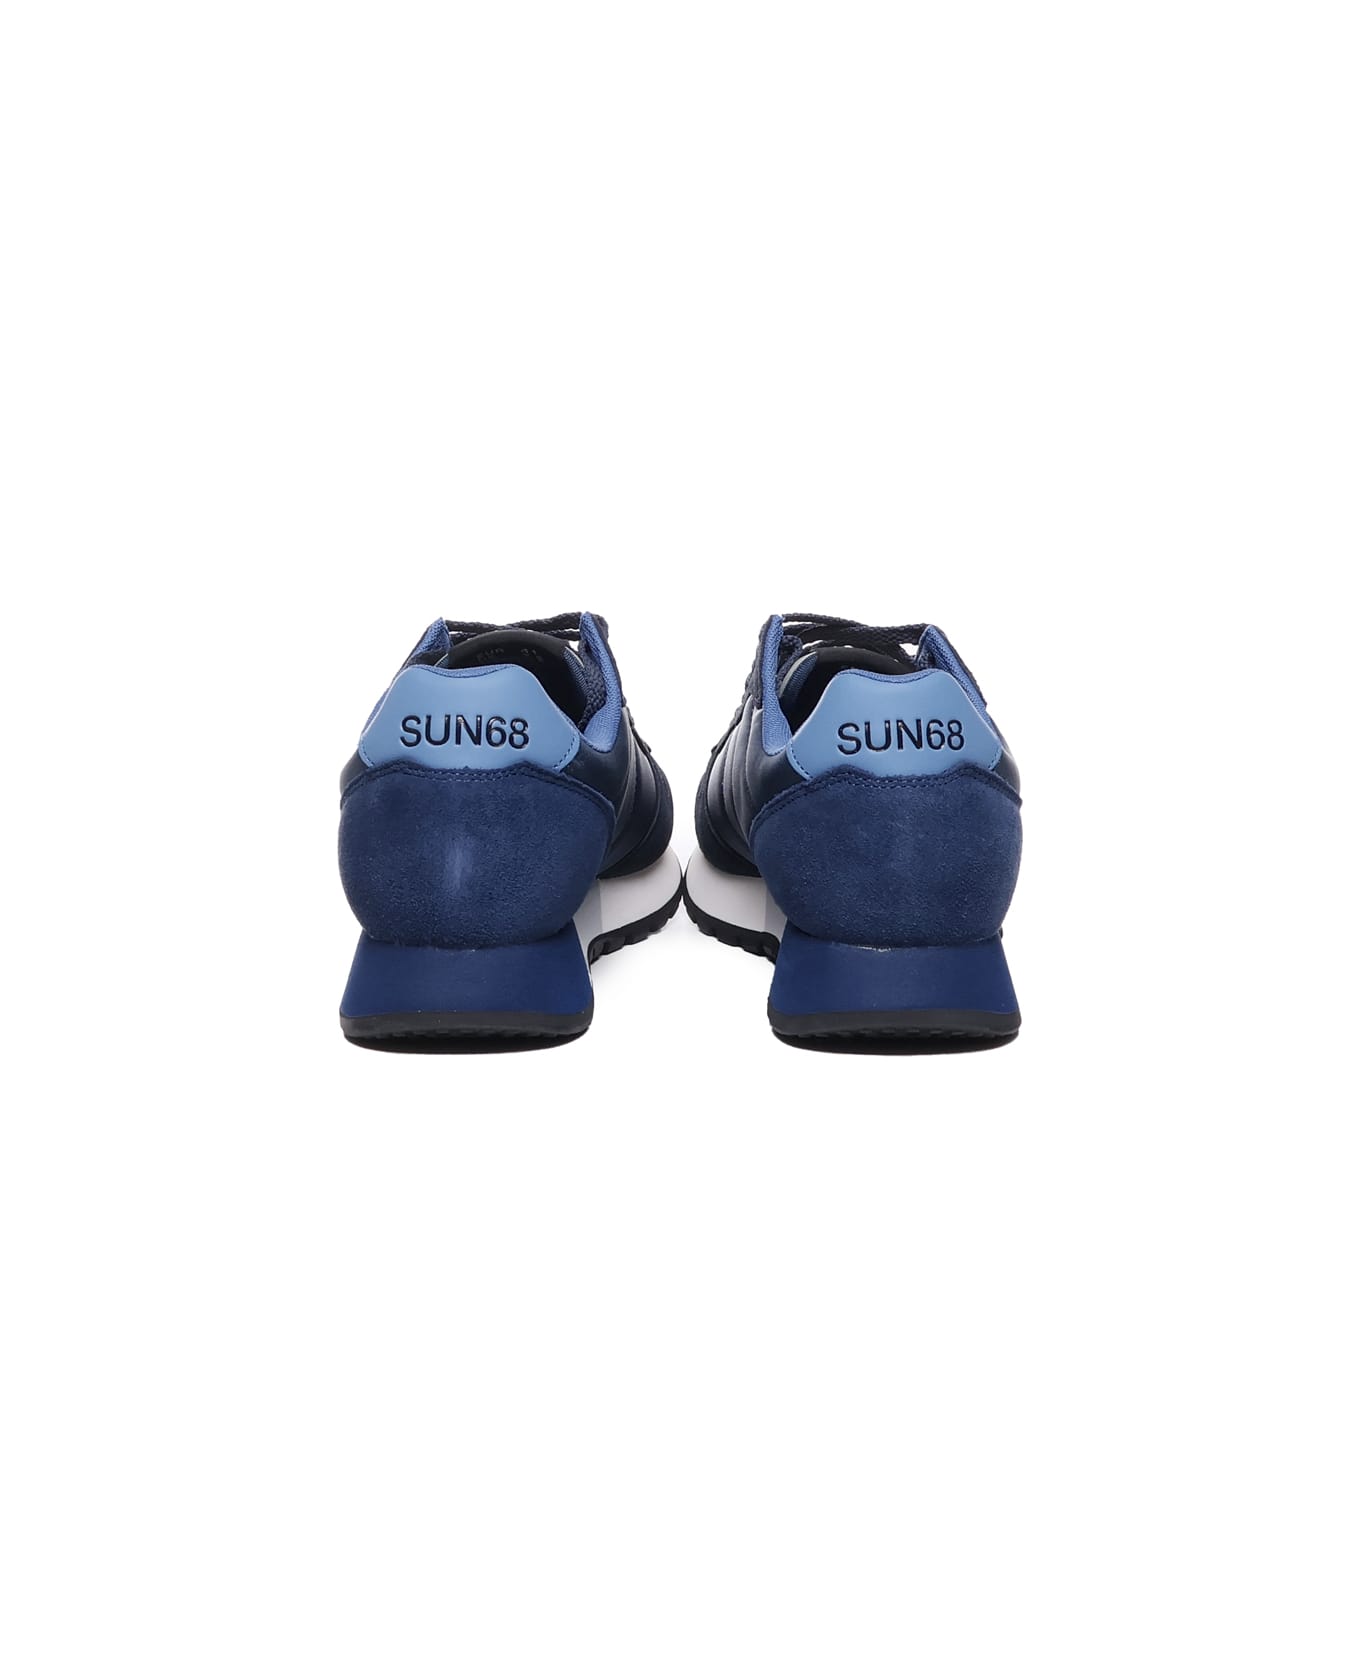 Sun 68 Sneakers Jaki Solid In Suede - Navy blue スニーカー